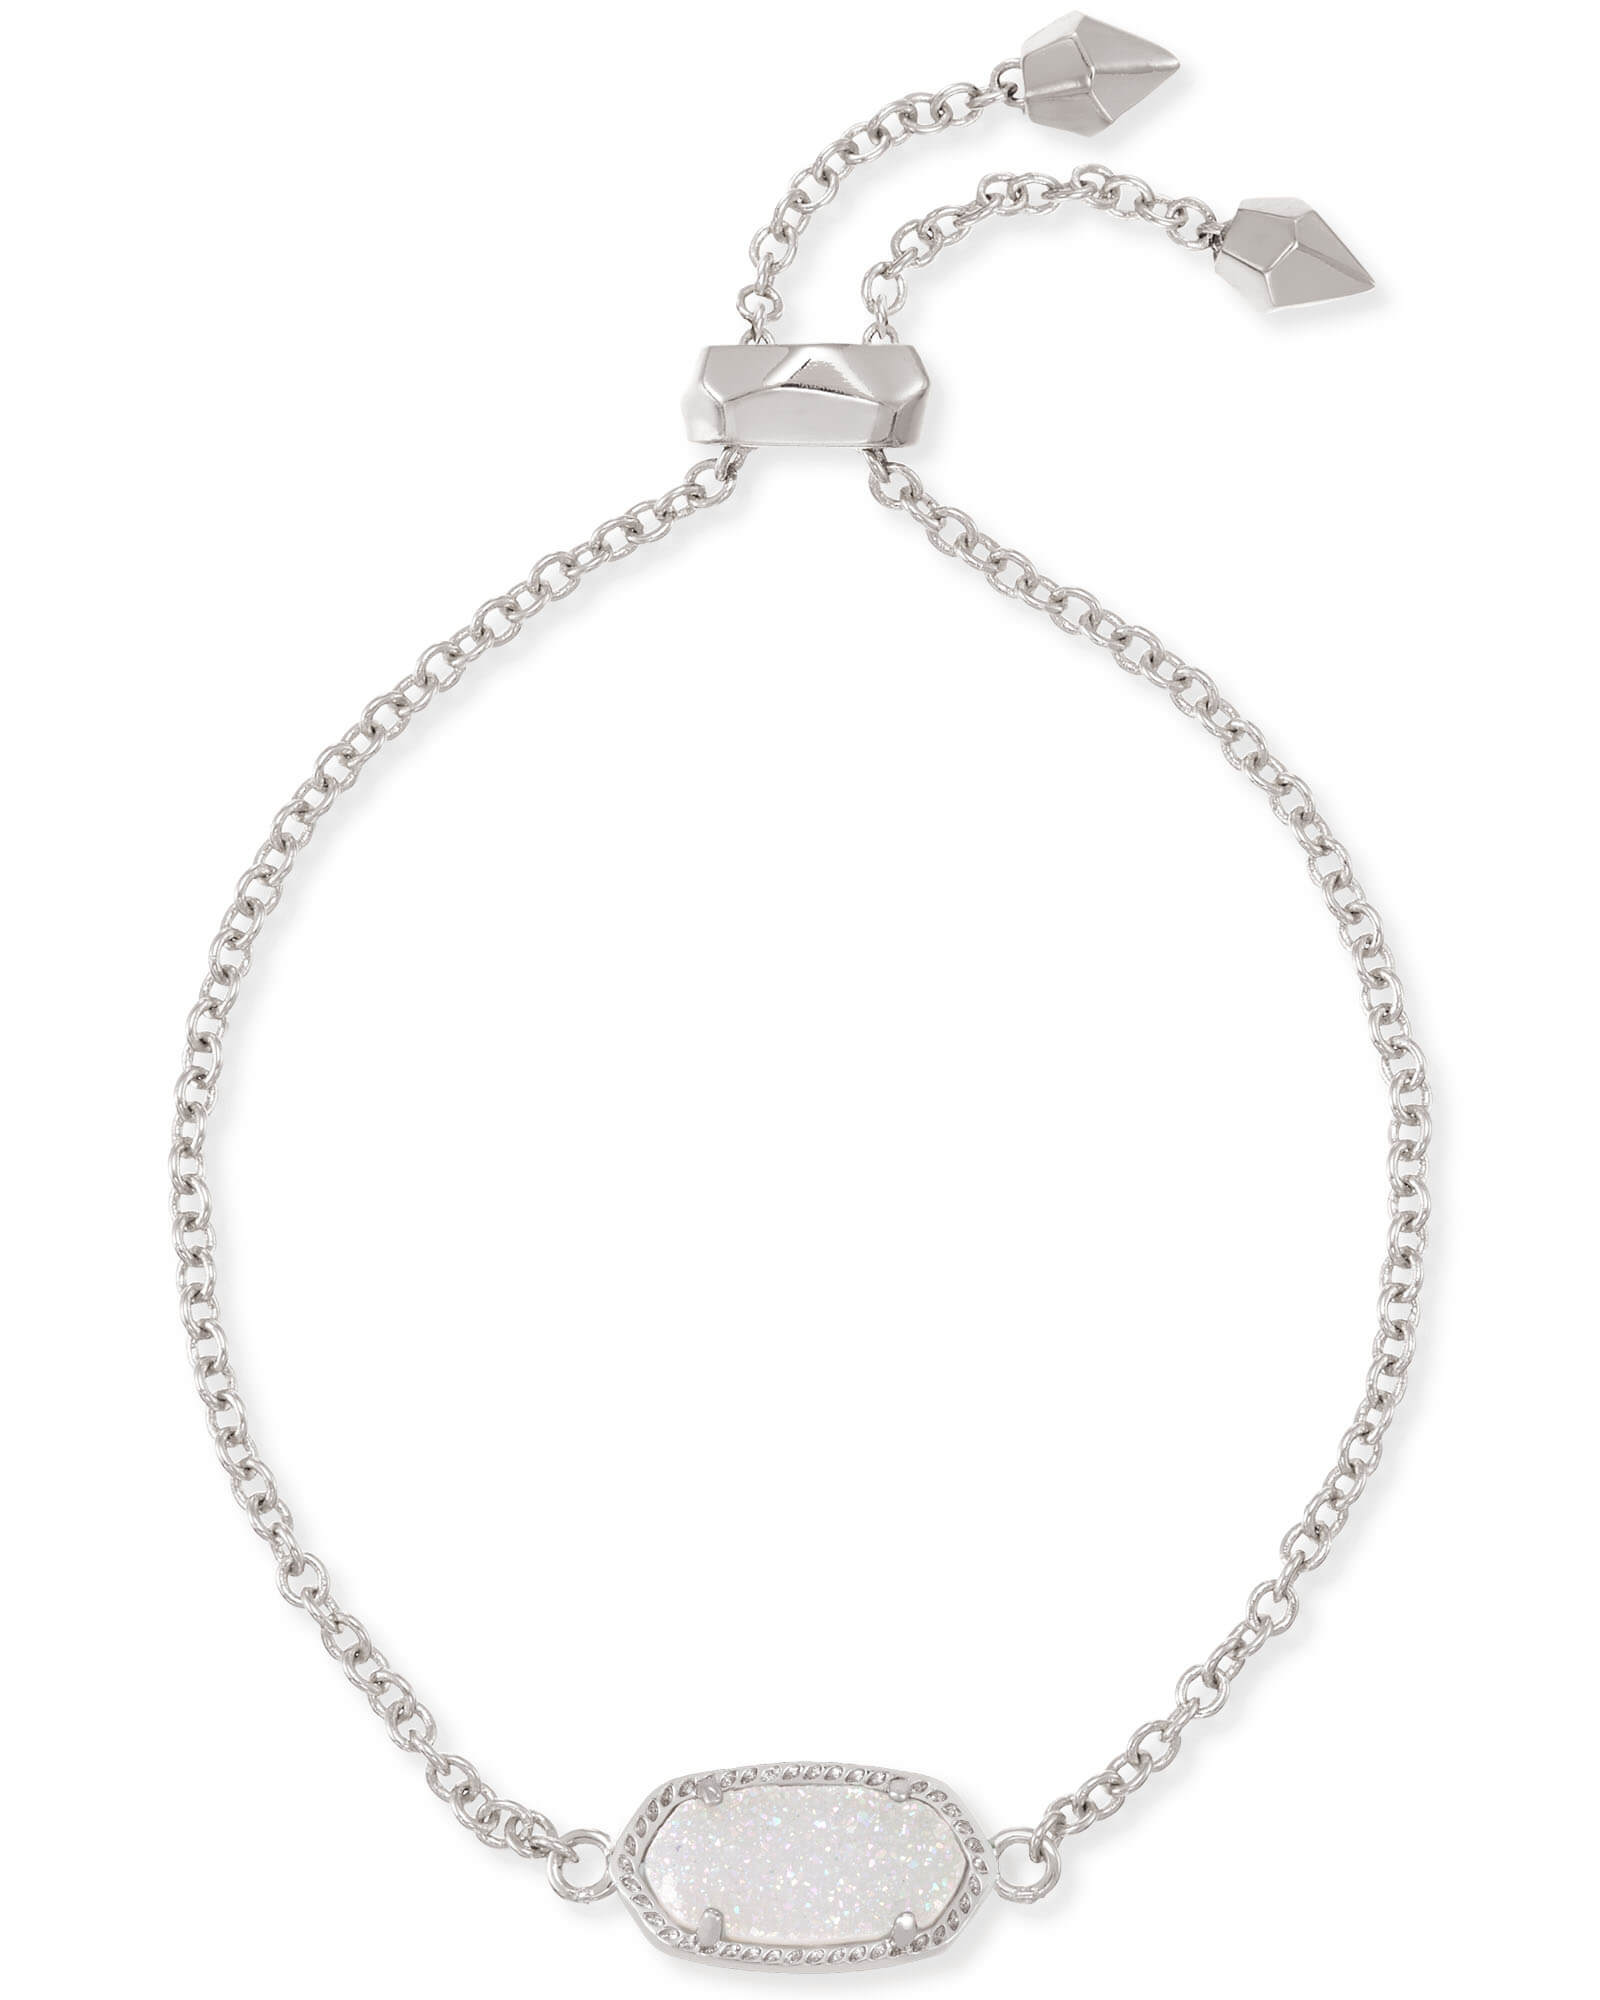 Kendra Scott Elaina Silver Adjustable Chain Bracelet in Iridescent | Drusy